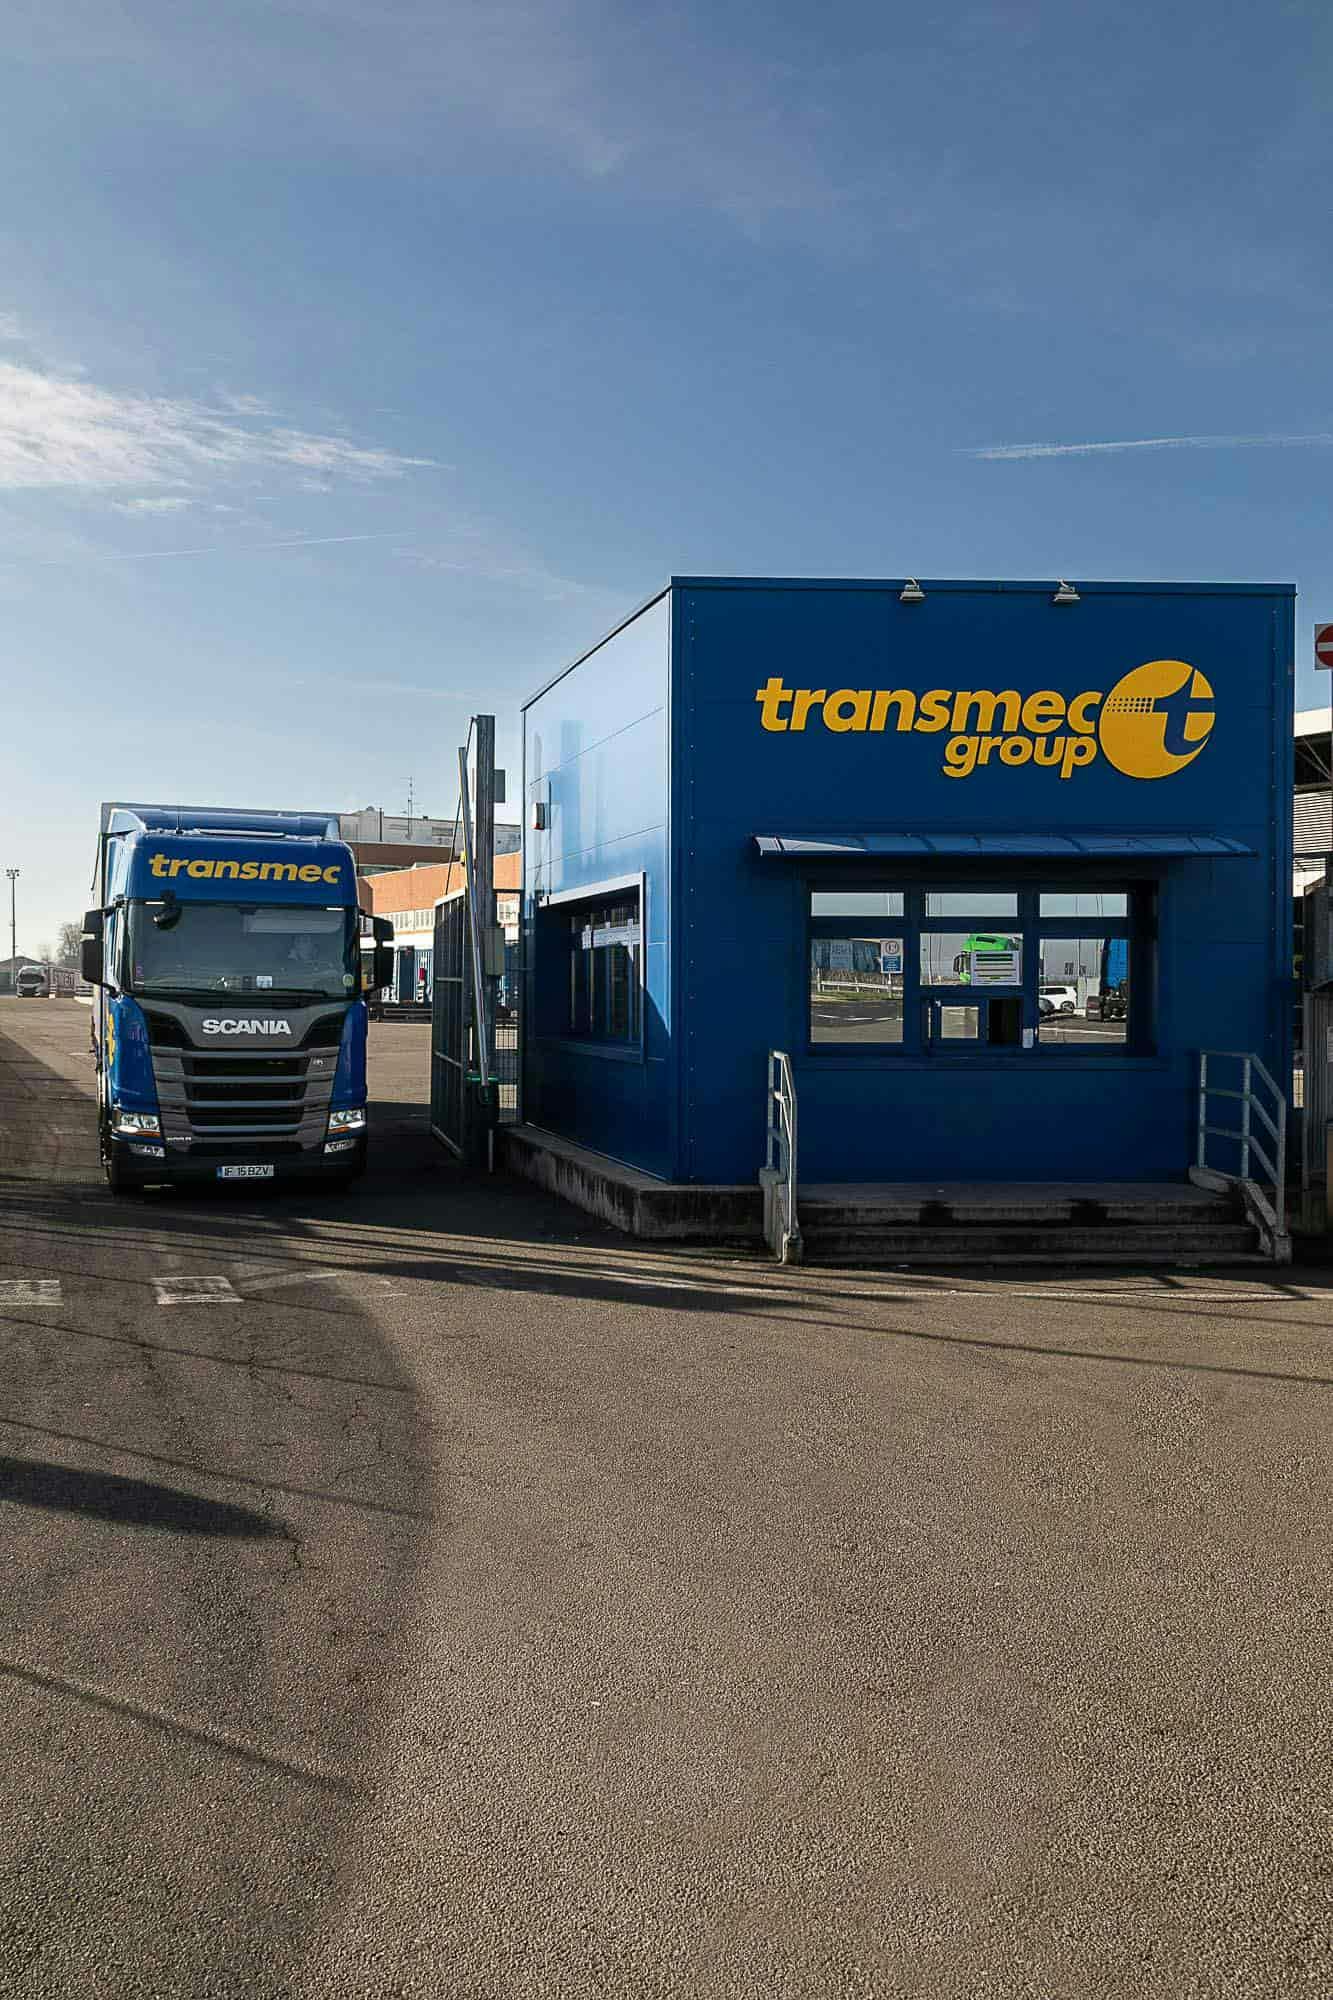 Transmec trucks and trailers.